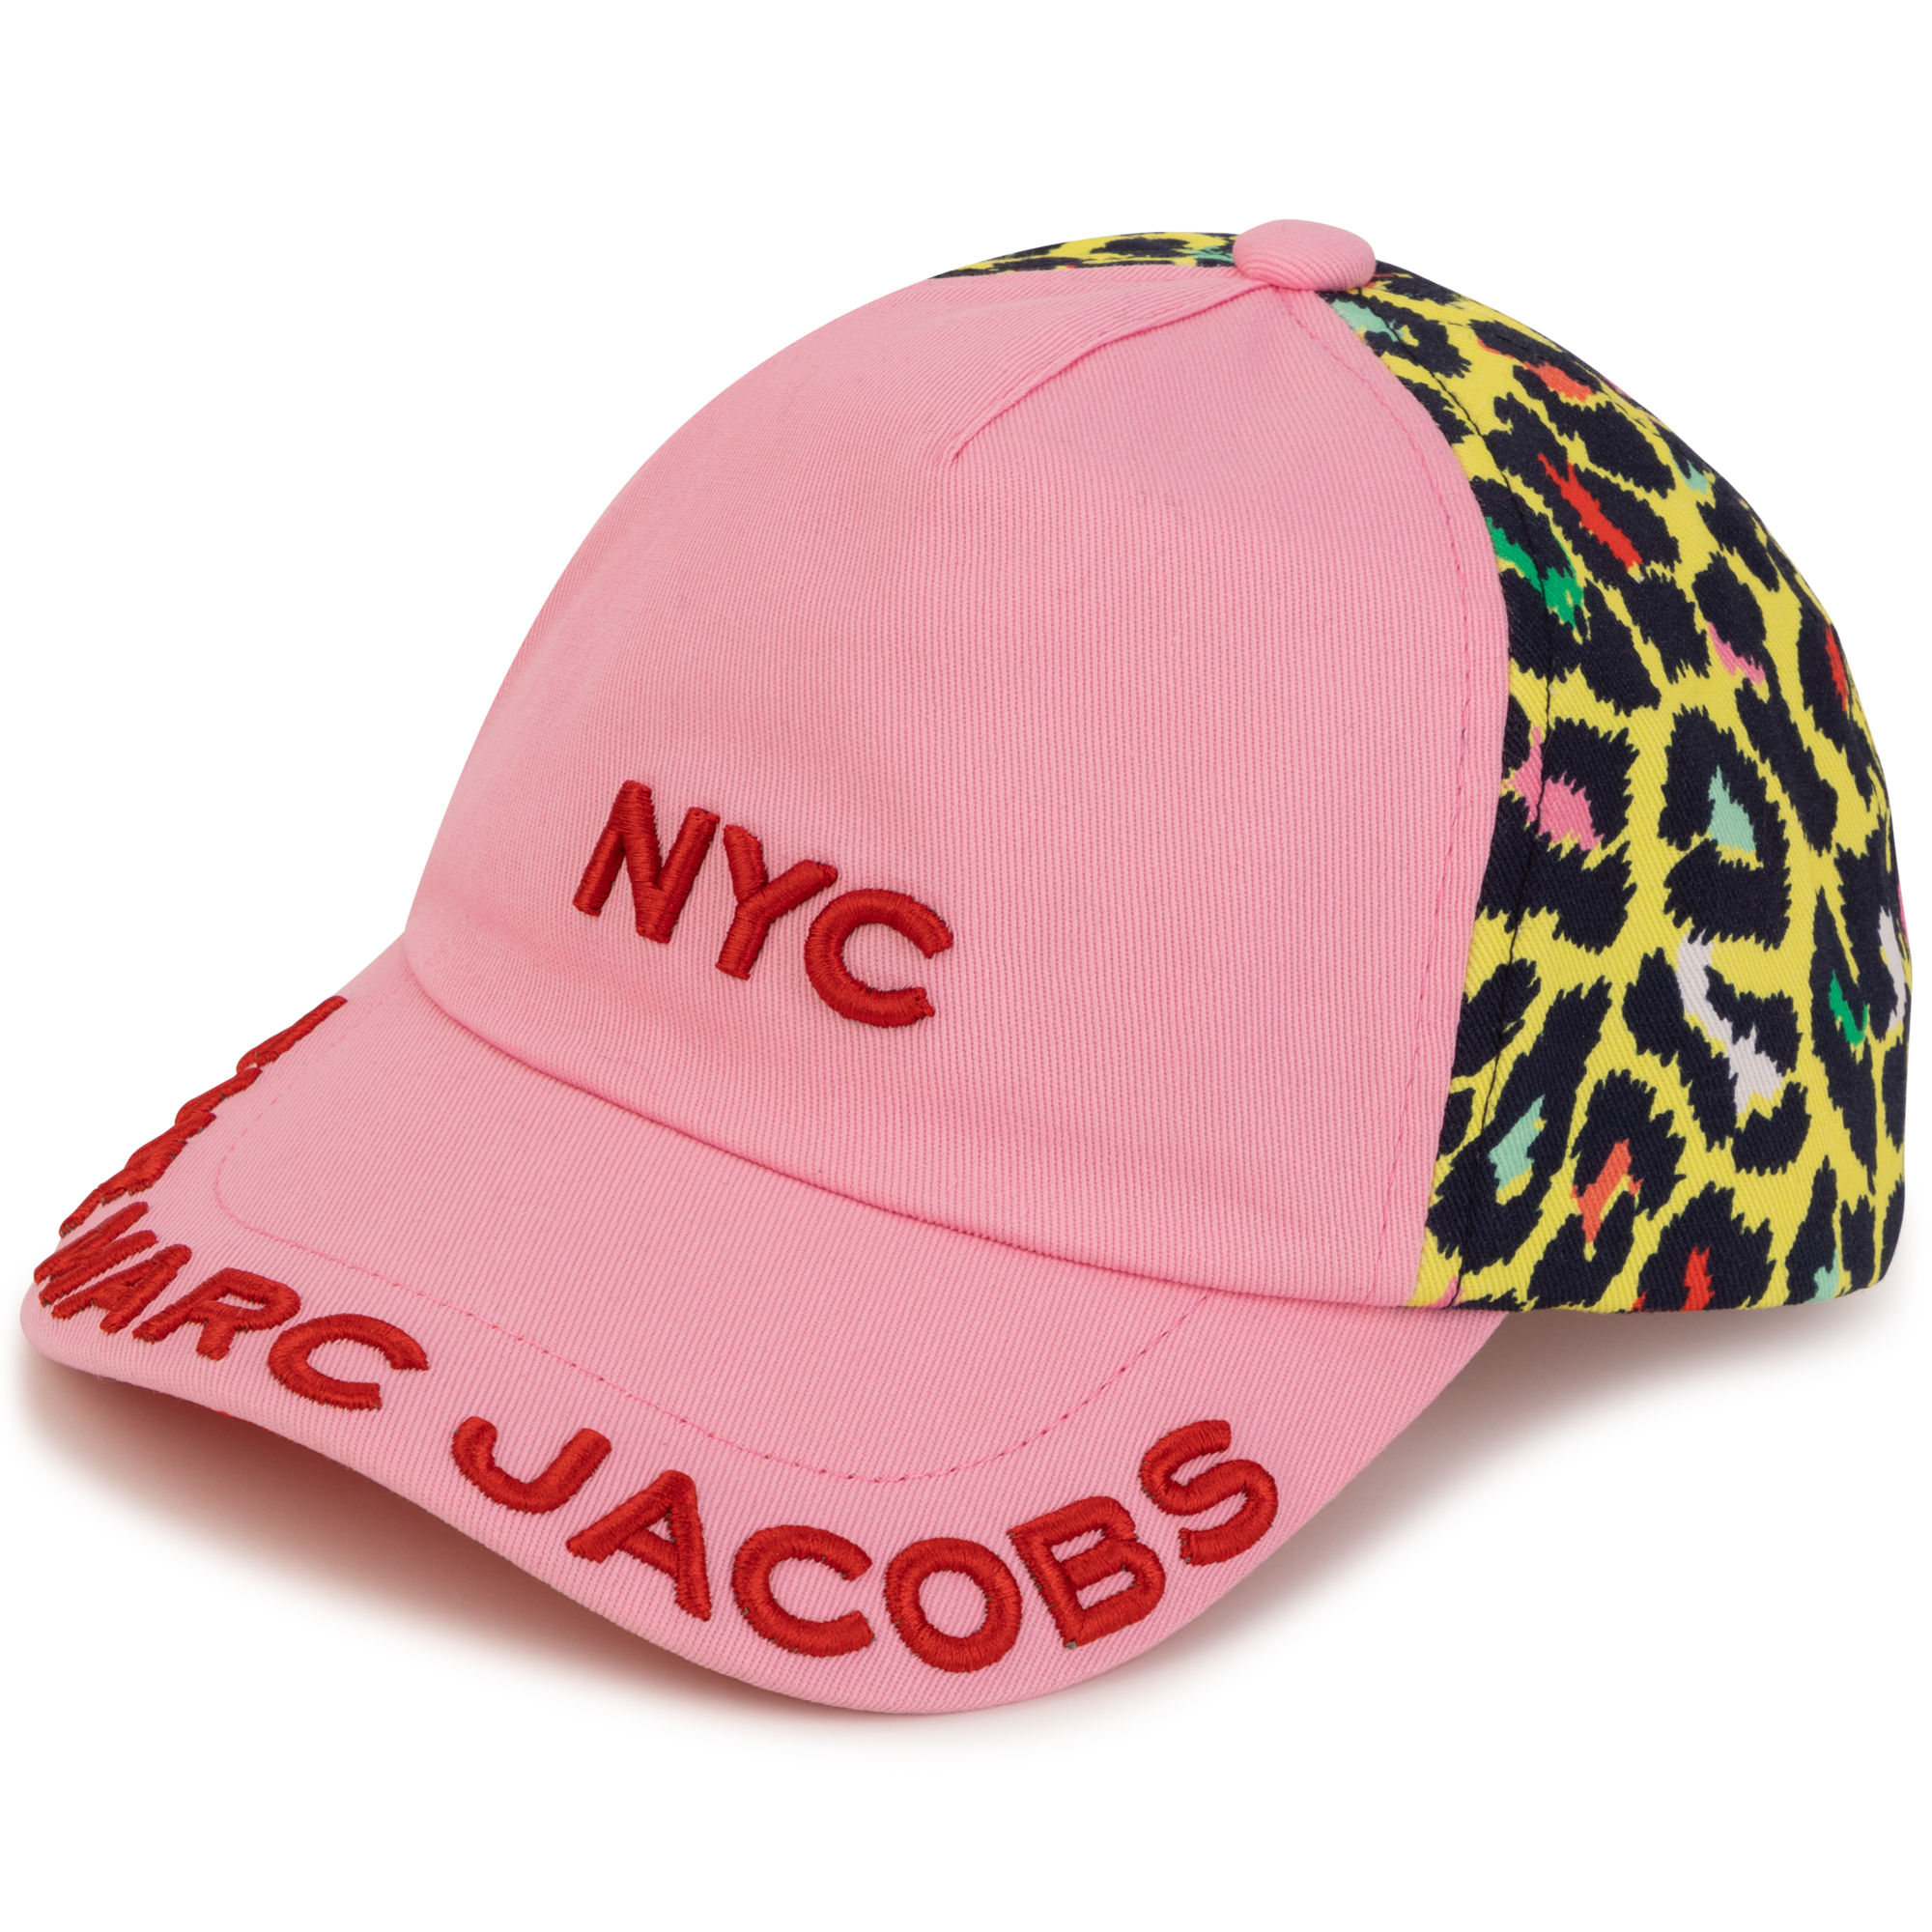 Printed cotton baseball cap MARC JACOBS for GIRL